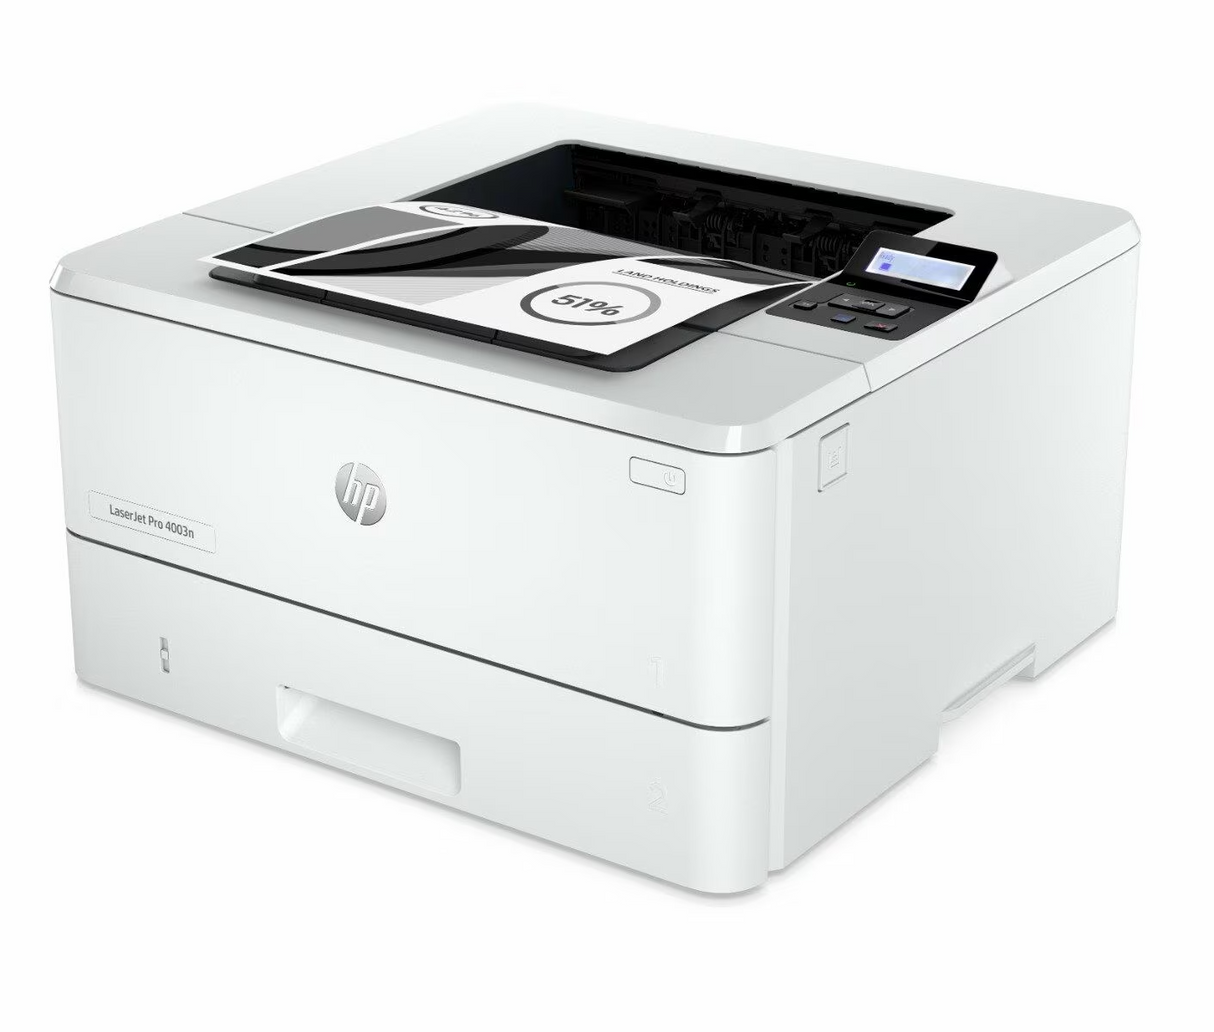 Impresora HP LaserJet Pro 4003n